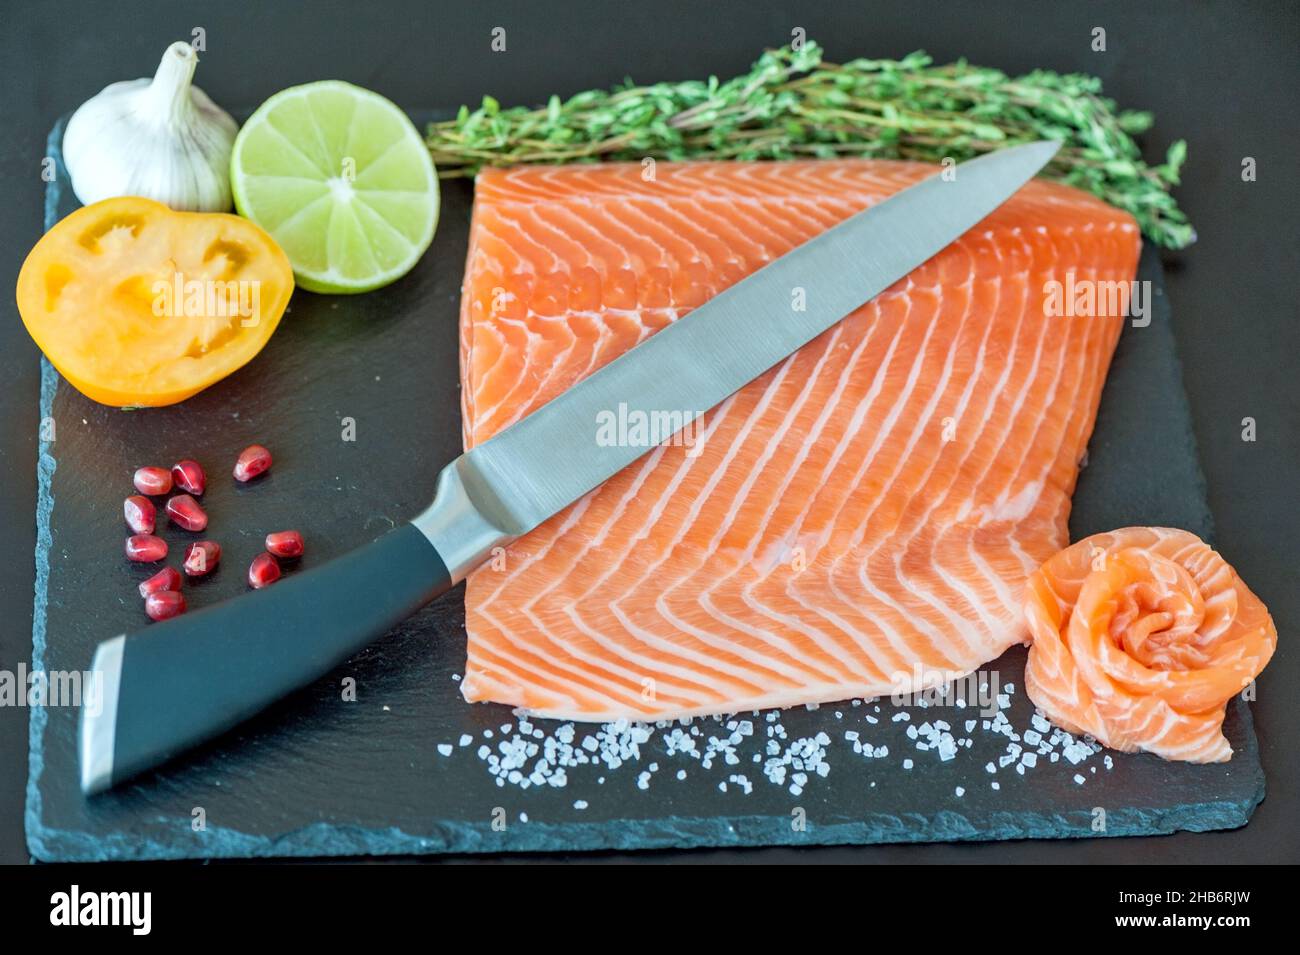 Hand chef using knife slice raw salmon on chopping block. Salmon fillet steak and seasonings on black cutting board. Stock Photo